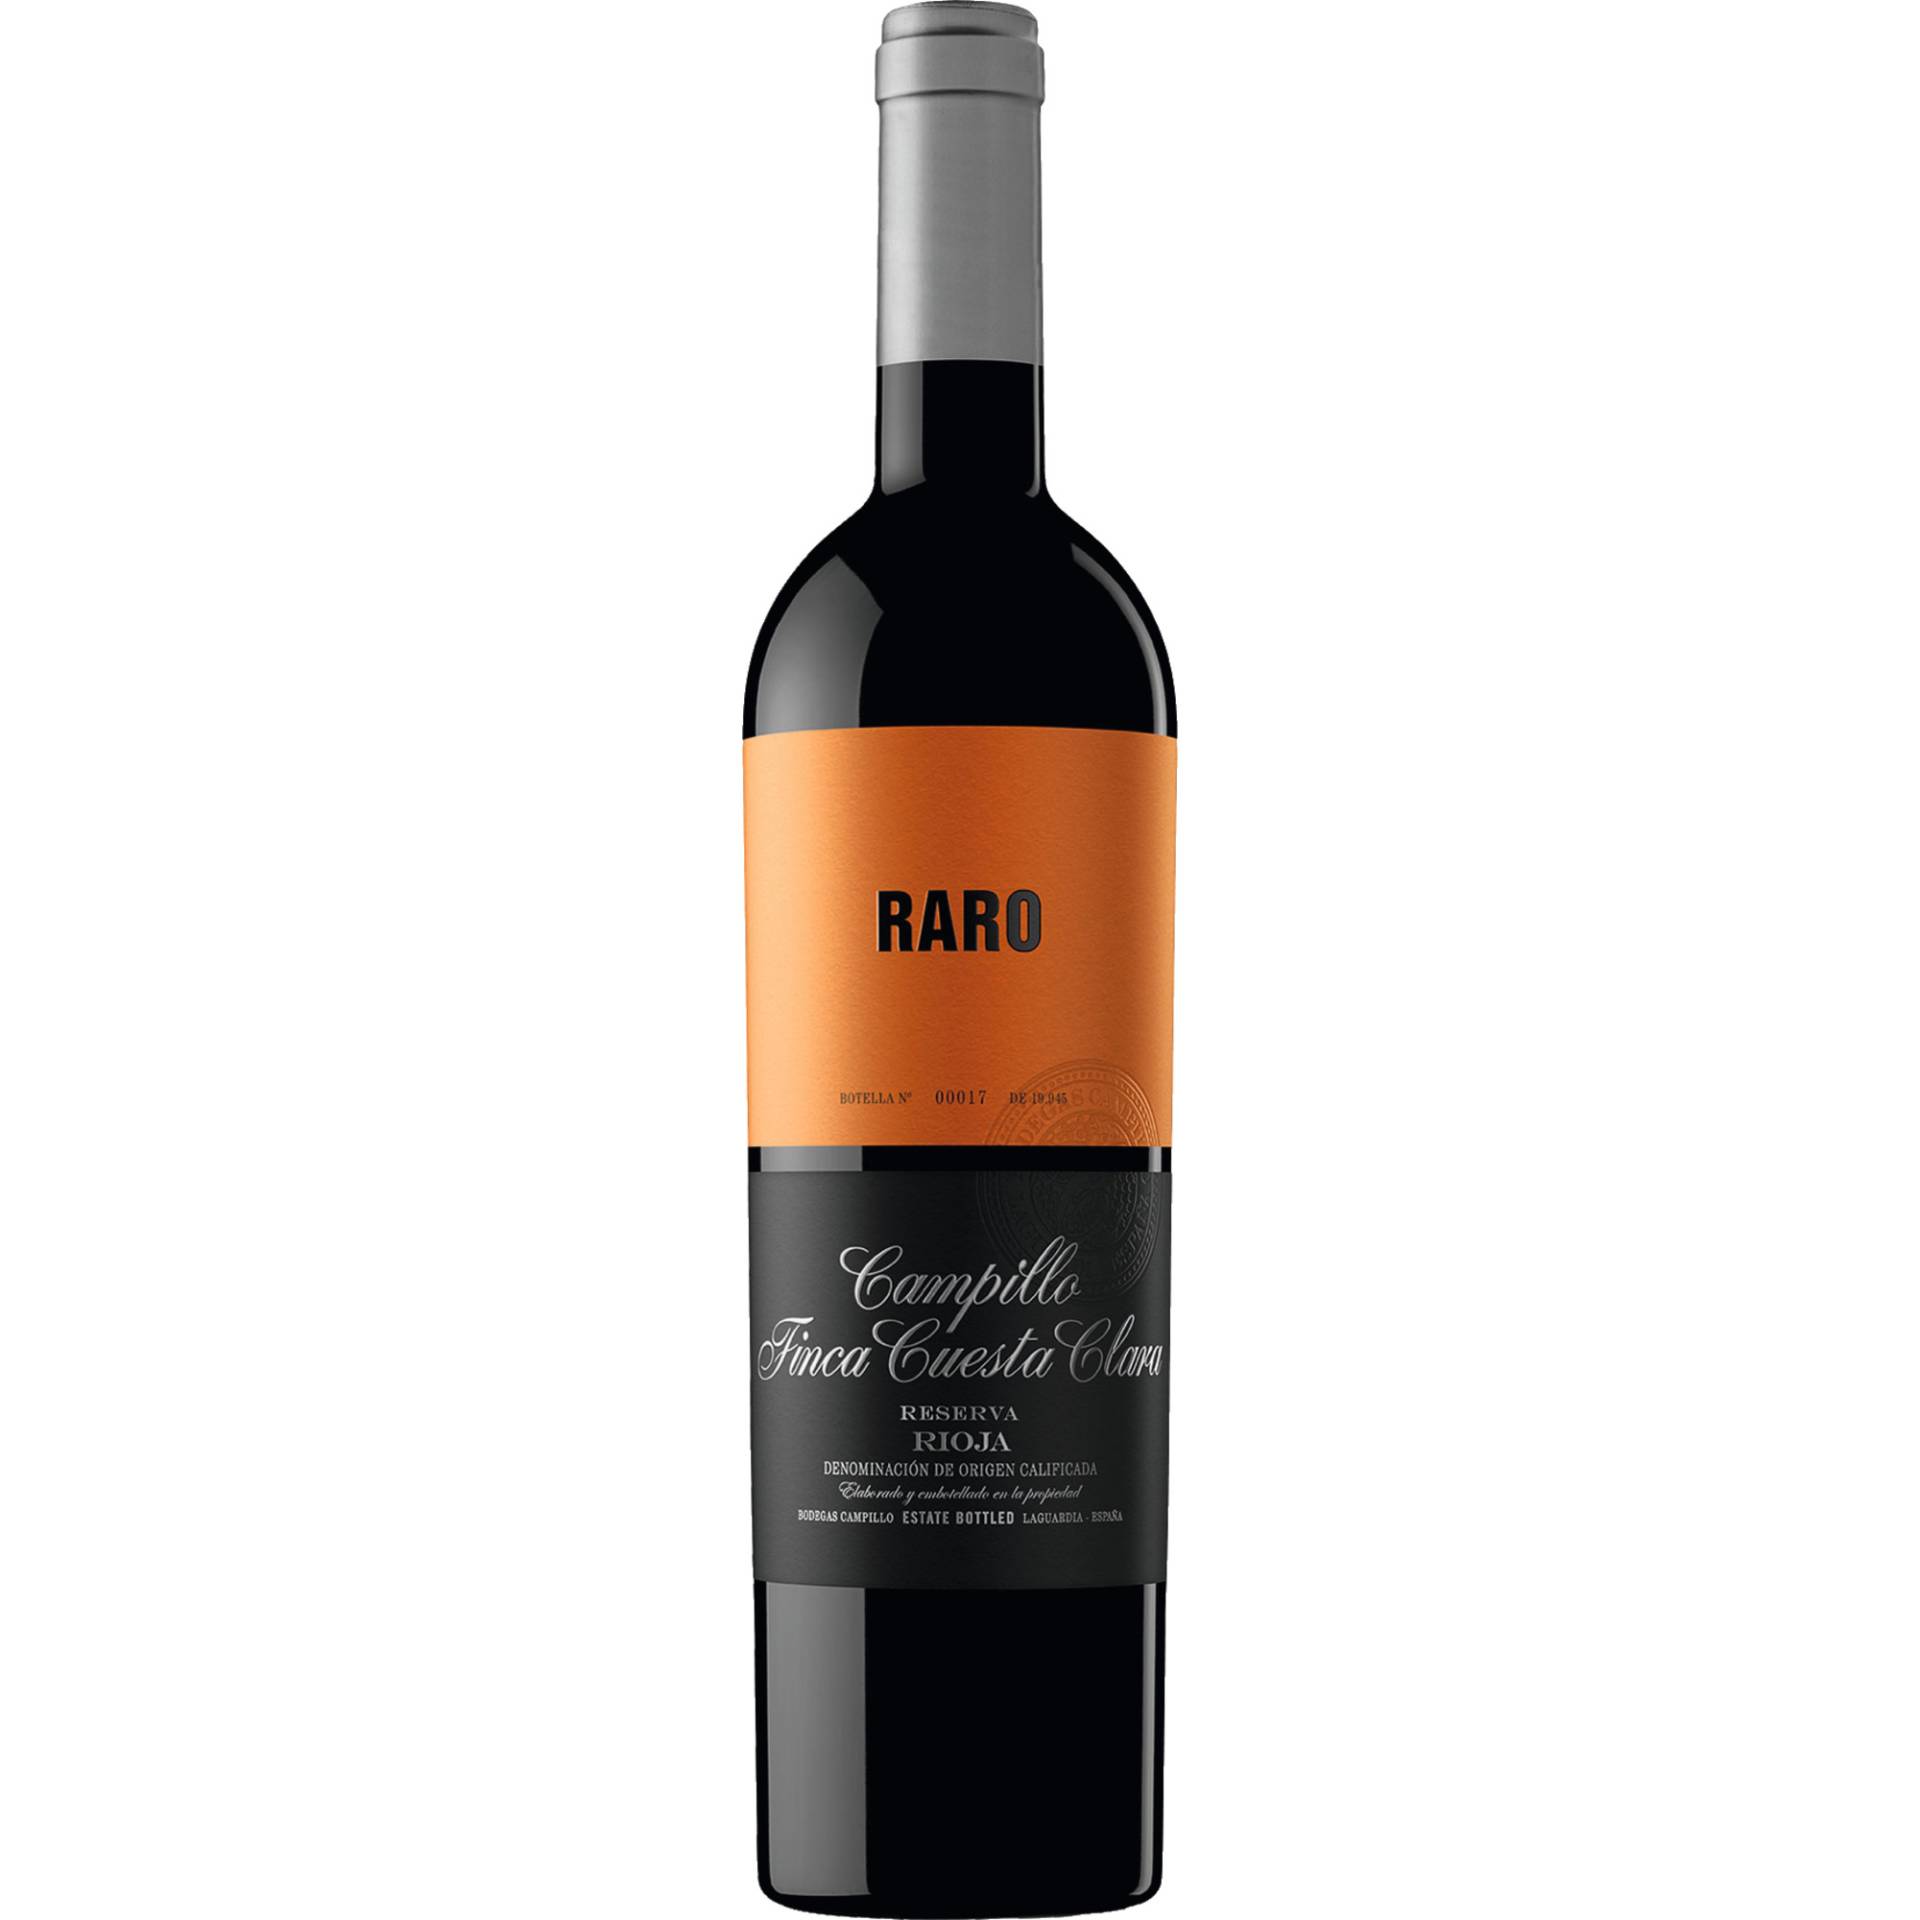 Campillo Rioja Raro Finca Cuesta Clara, Rioja DOCa, Rioja, 2015, Rotwein von "Bodegas Faustino S.L.",01320,"Oyon Alava",Spanien